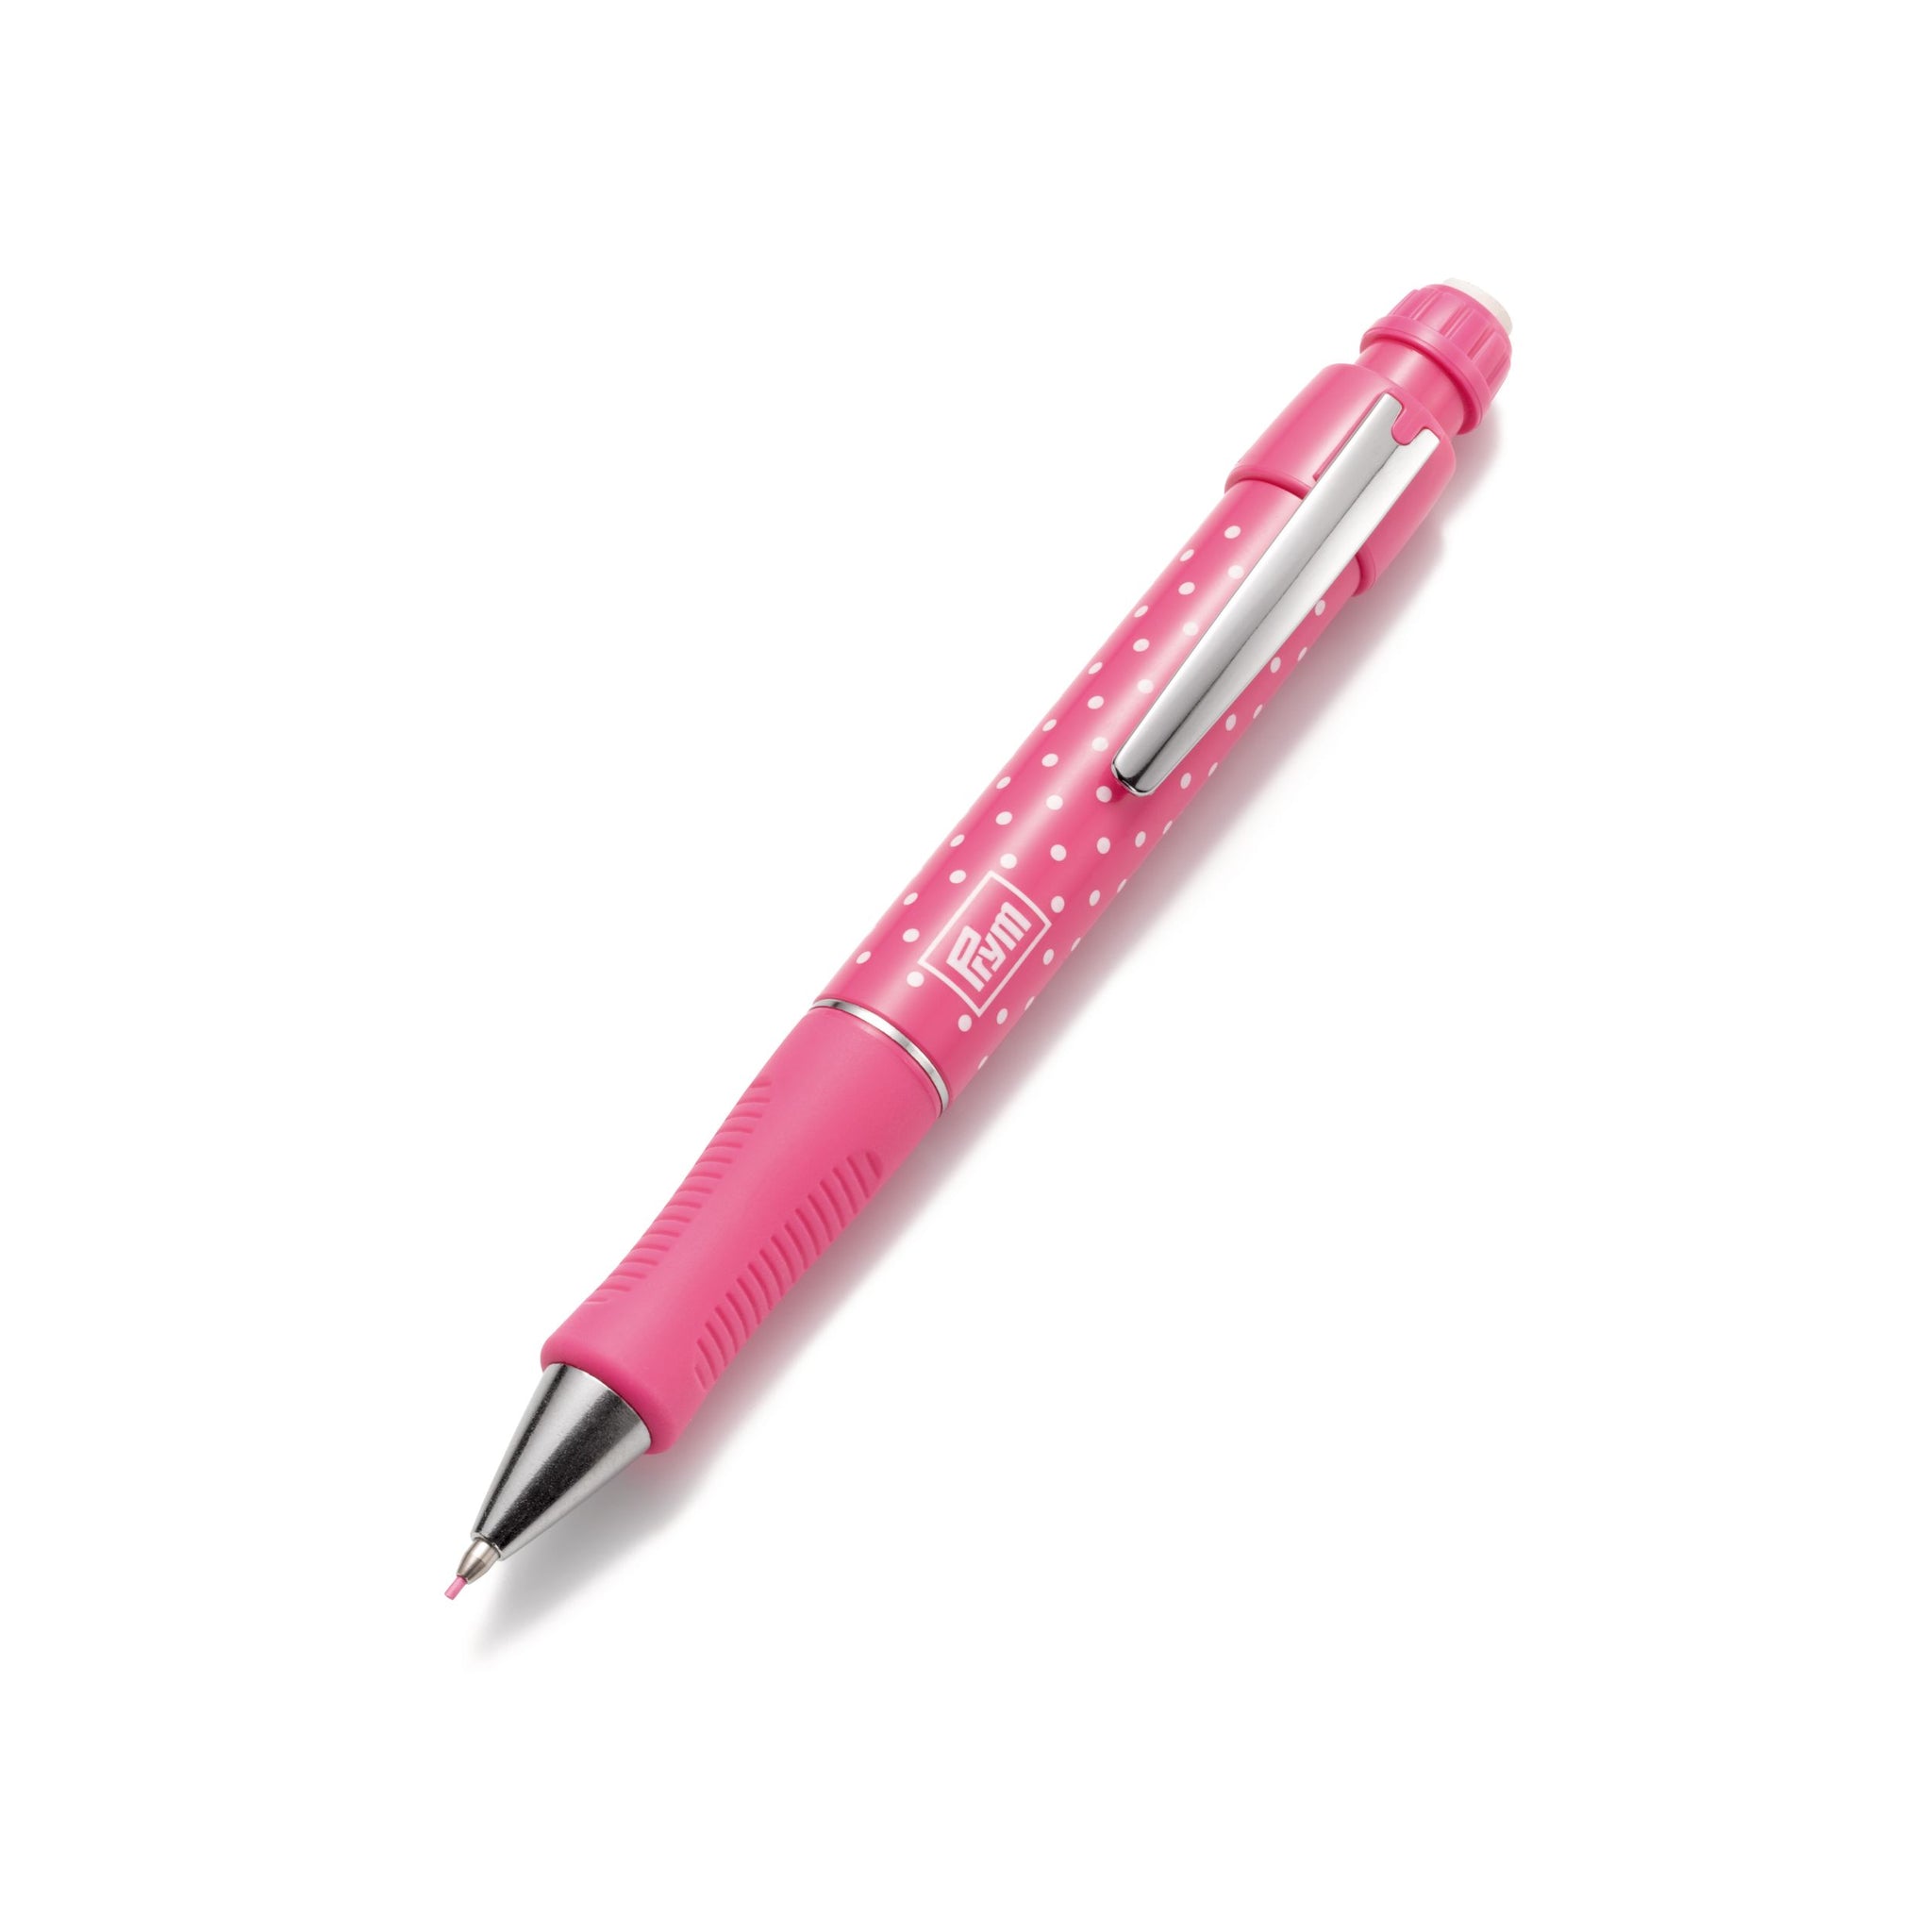 Prym 611627 2-Piece Chalk Pencils Plus Brush, White/Pink